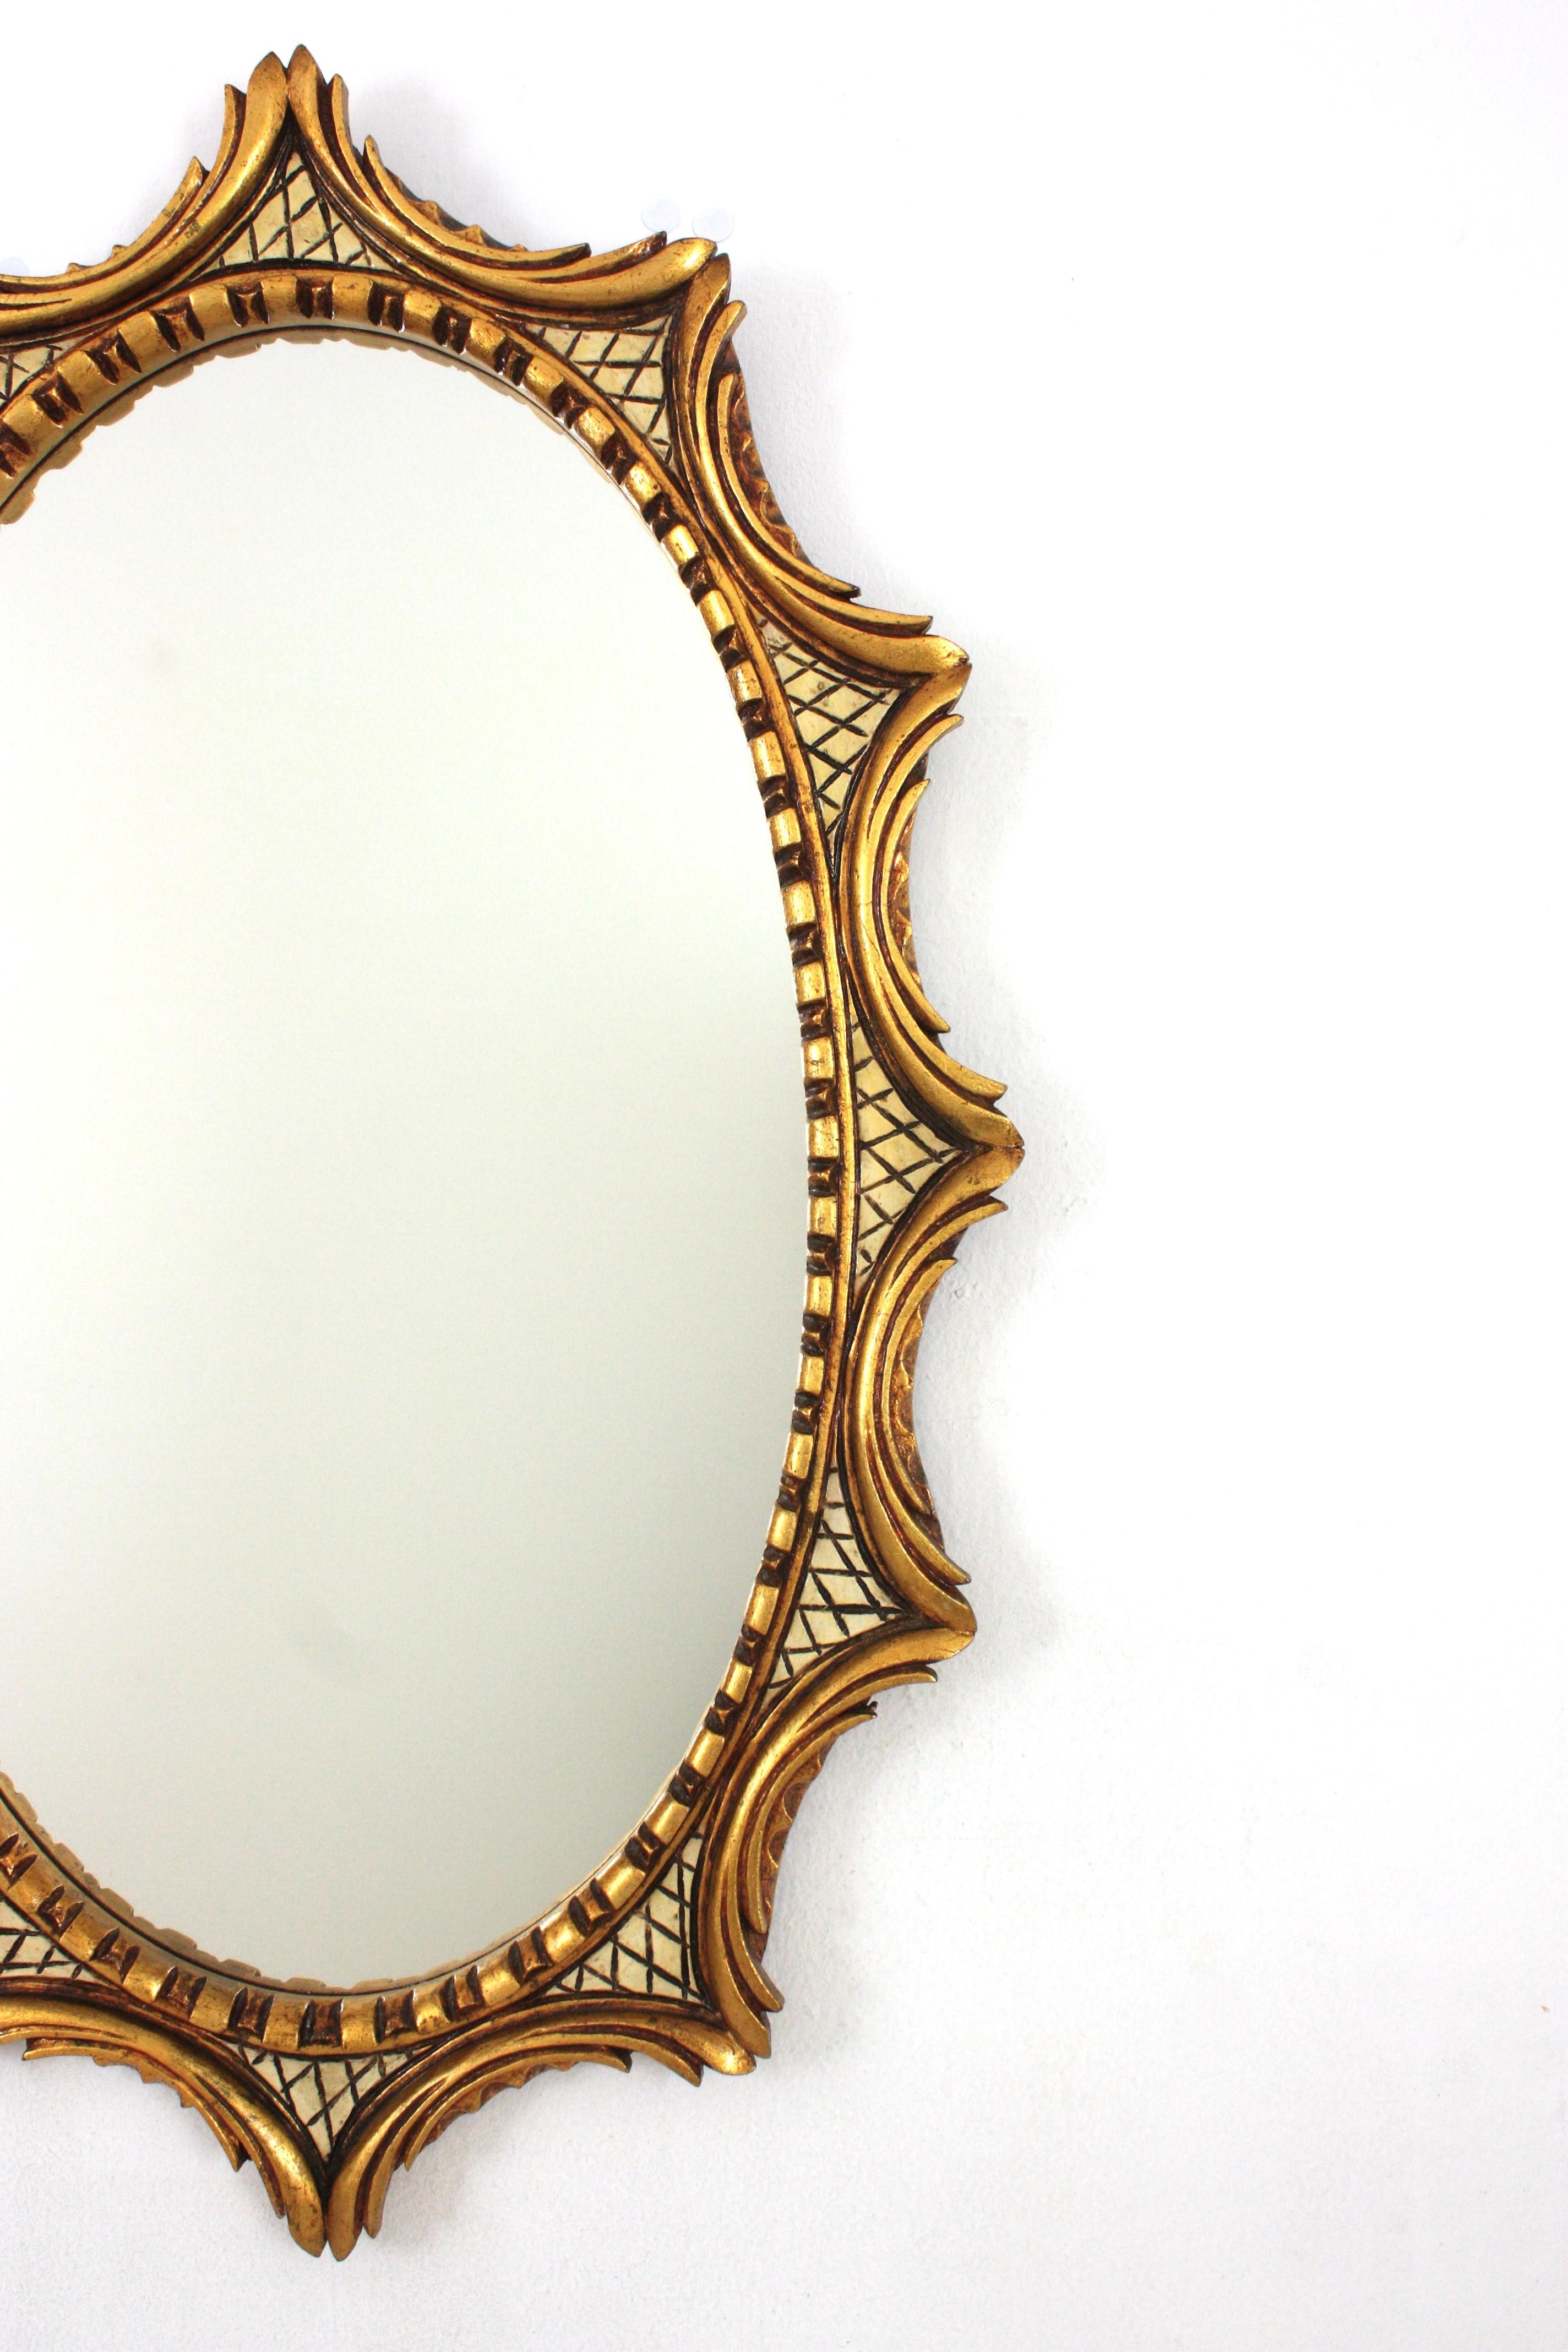 Spanish Sunburst Oval Mirror, Gilt & Beige Carved Wood, 1950s For Sale 2